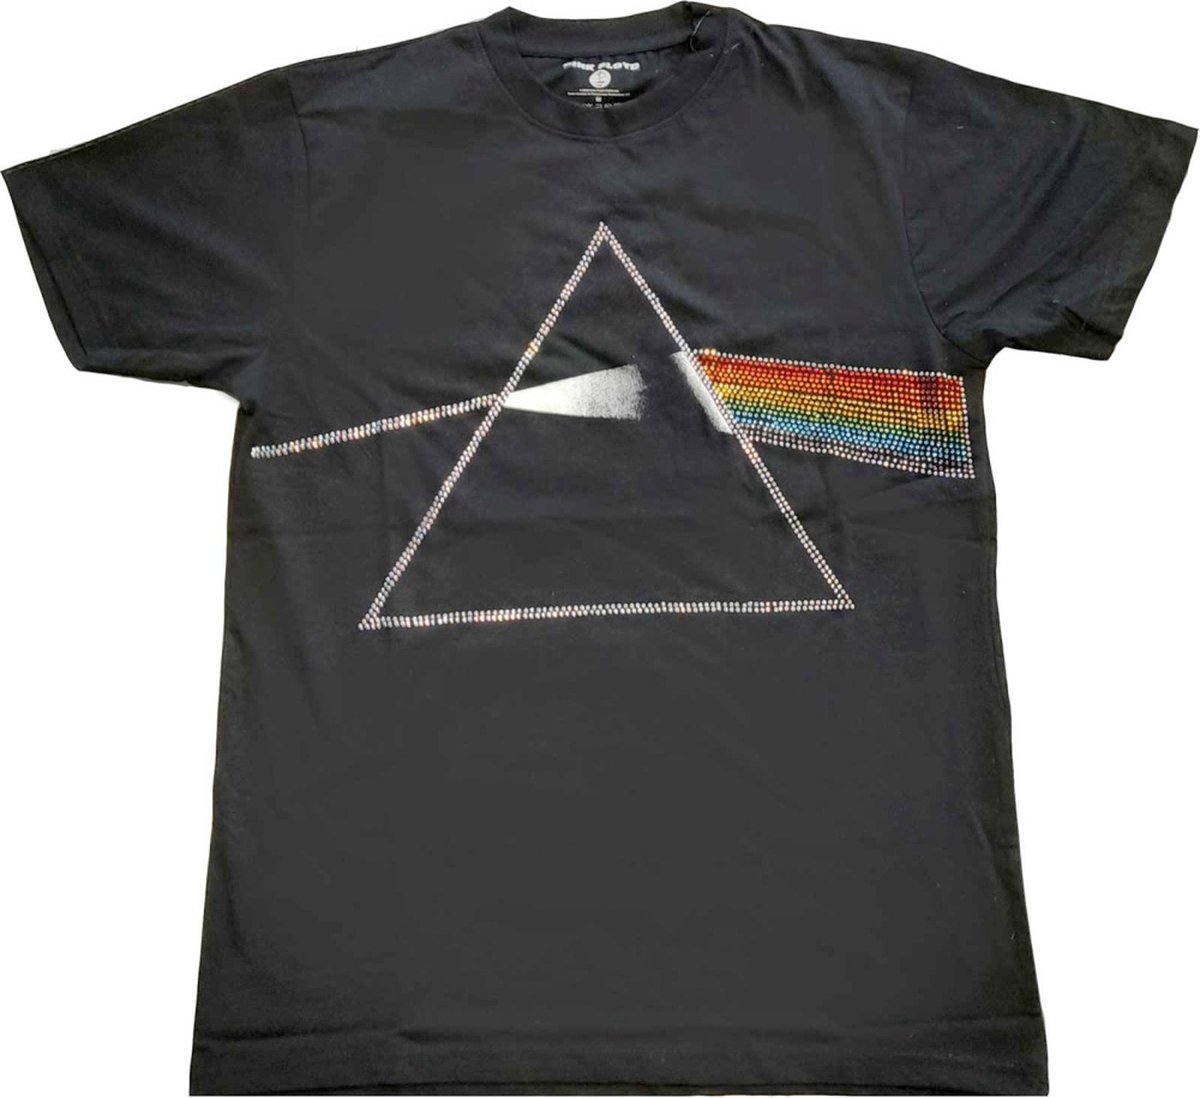 Pink Floyd - Dark Side Of The Moon Heren T-shirt - S - Zwart